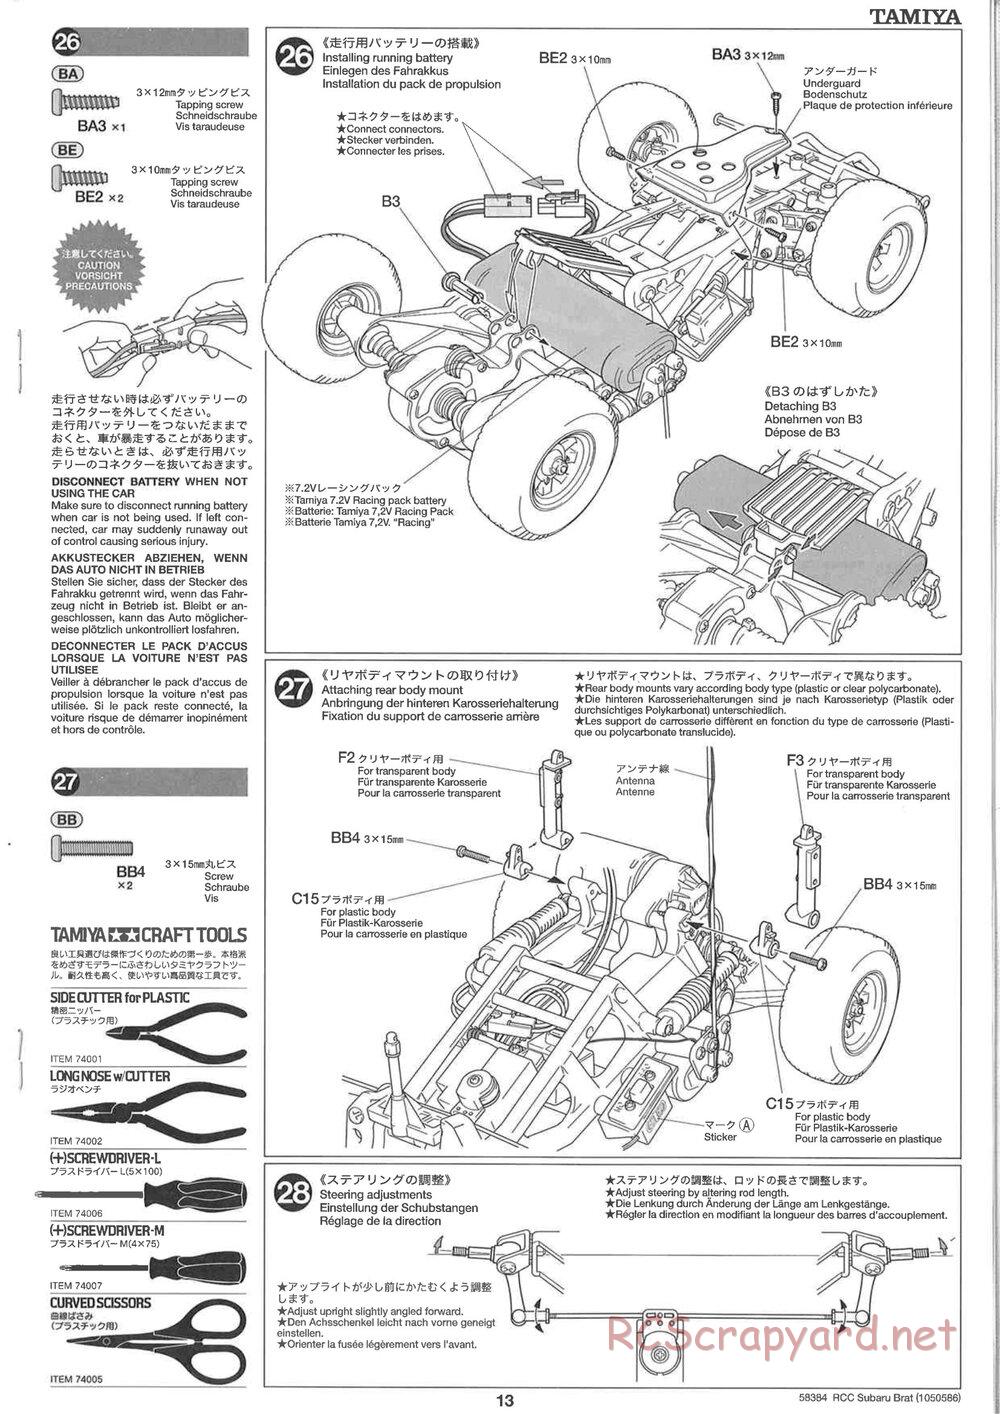 Tamiya - Subaru Brat 2007 - ORV Chassis - Manual - Page 13